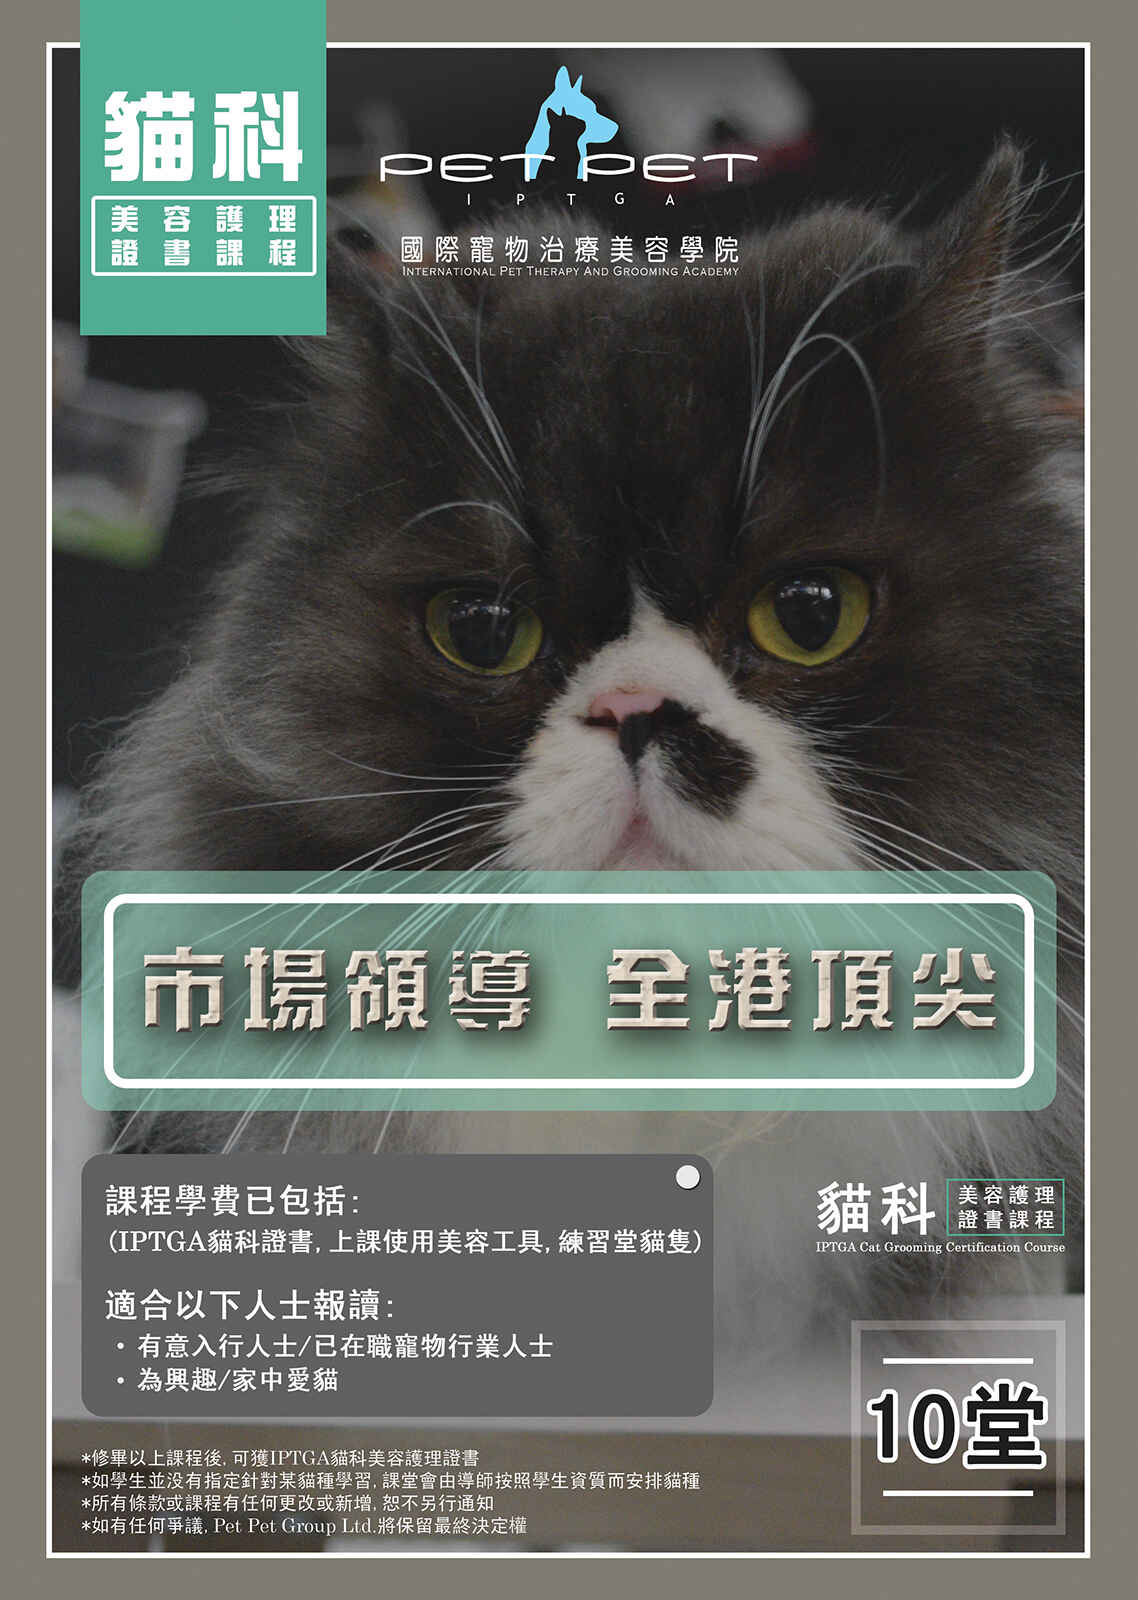   IPTGA Cat Grooming Certification Course   